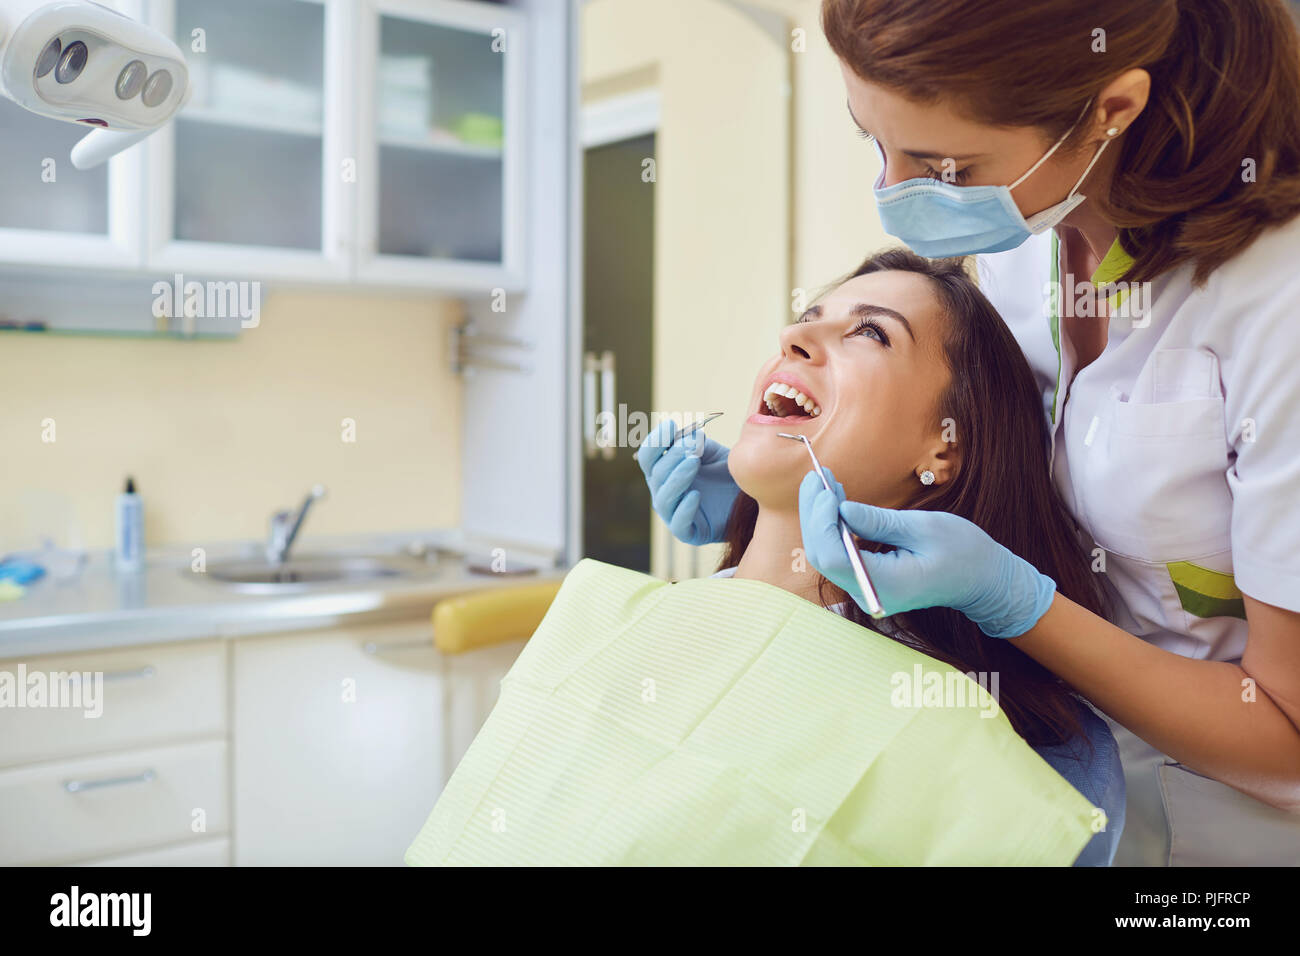 Una ragazza con un bel sorriso con un dentista. Foto Stock